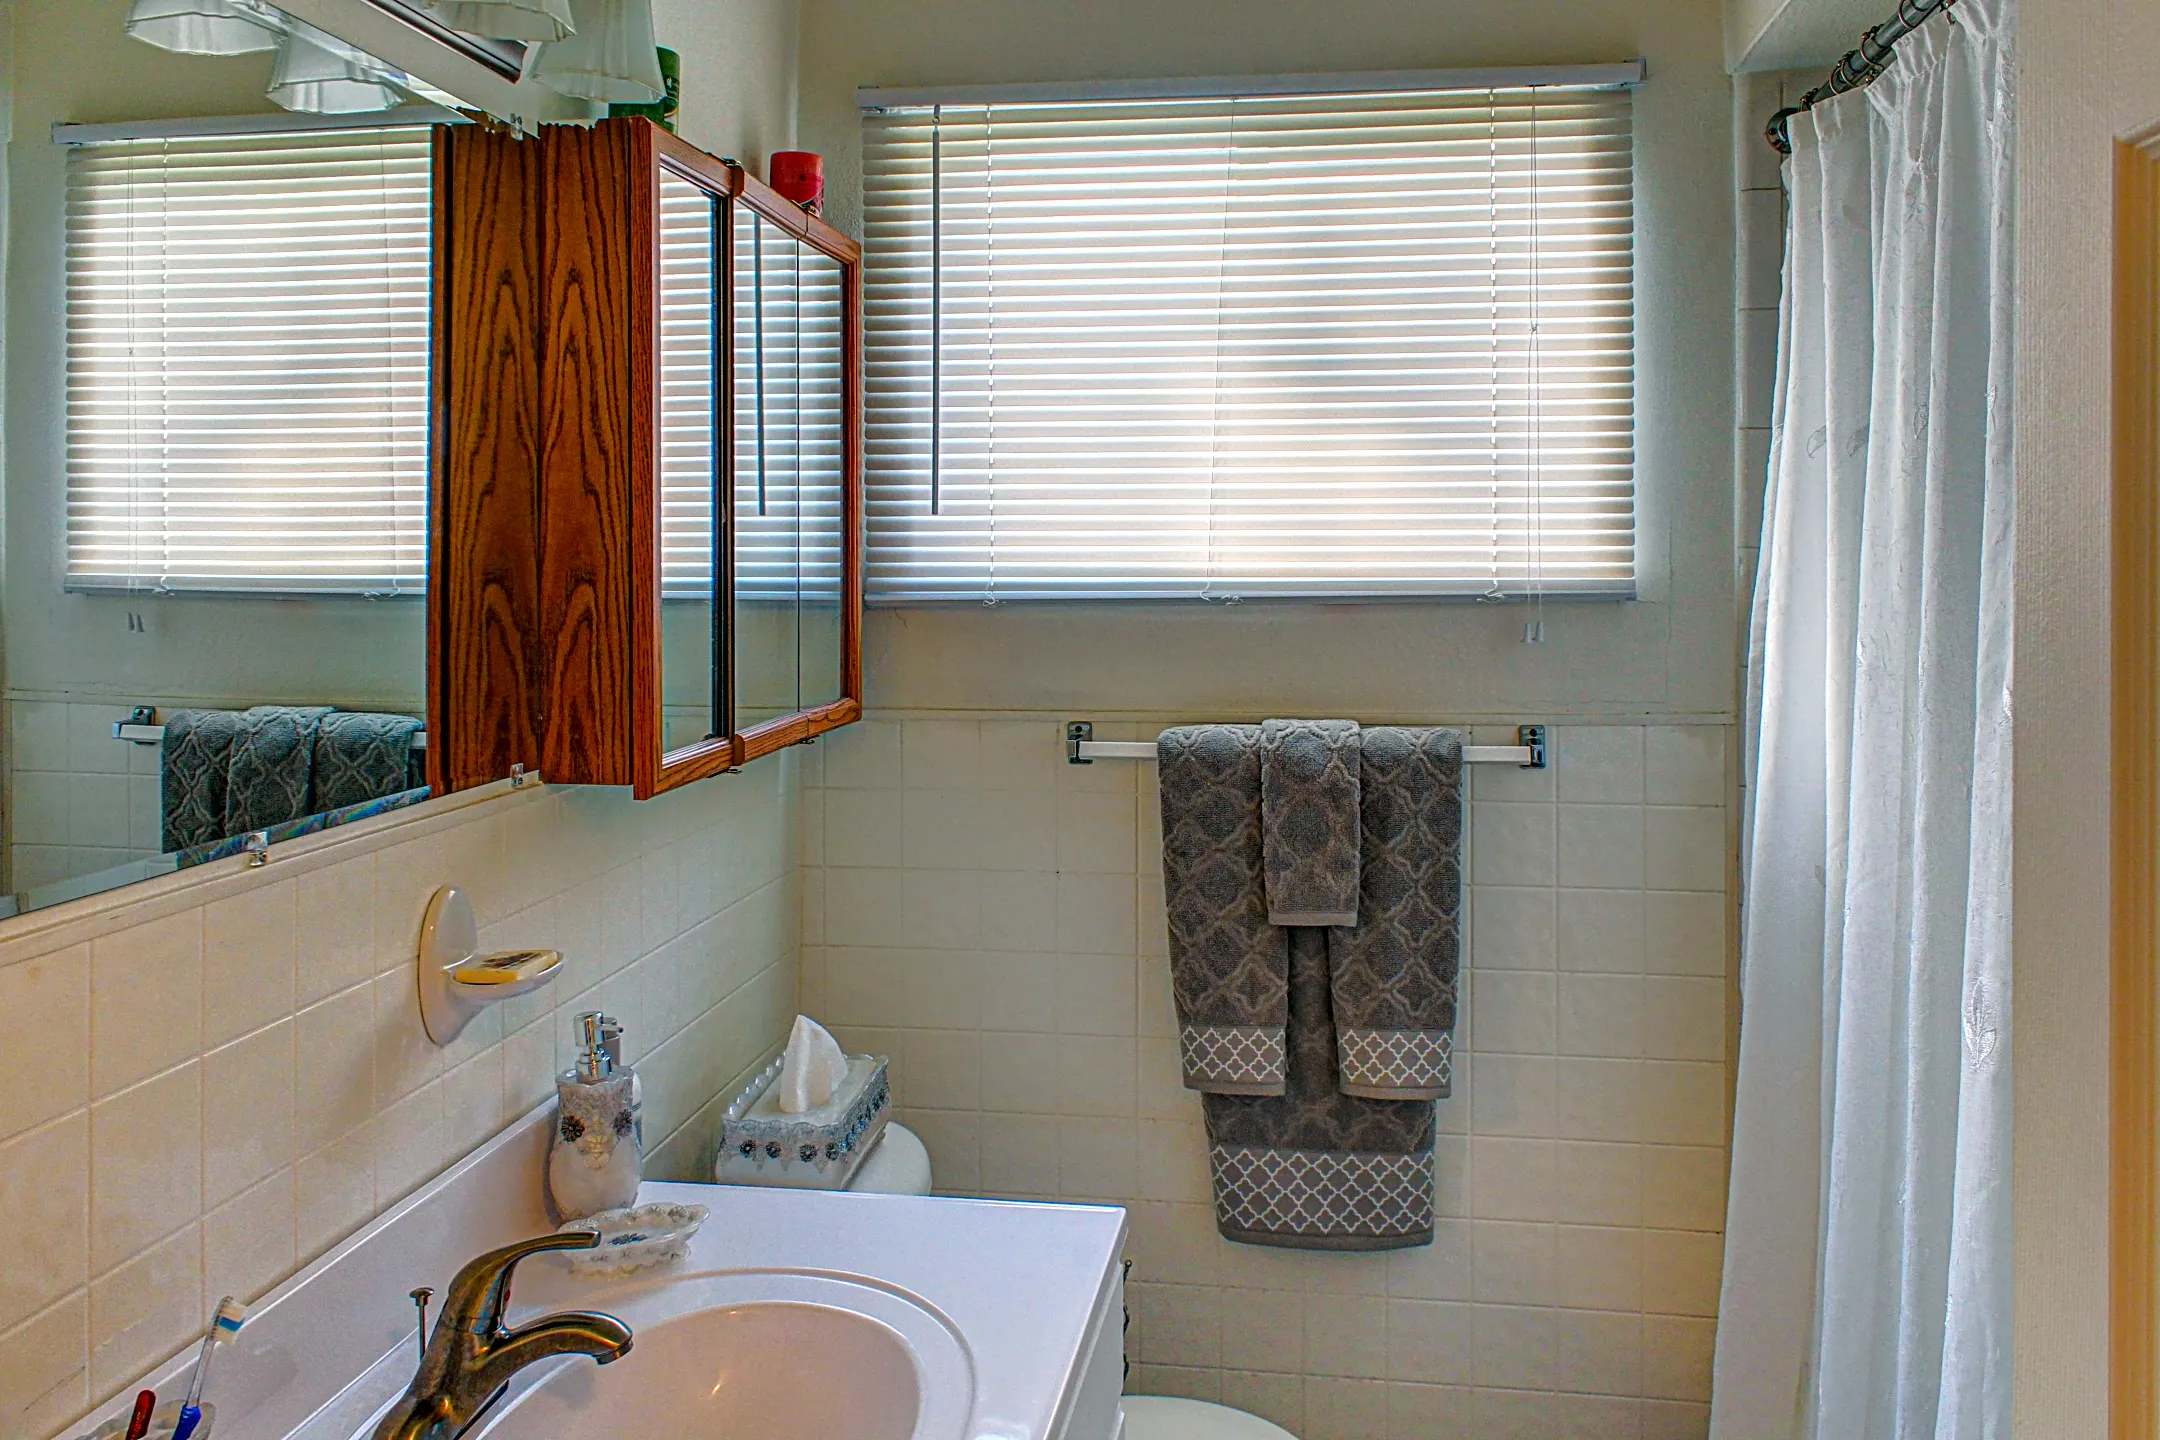 Bathroom - Campbell Row Apartments - Royal Oak, MI